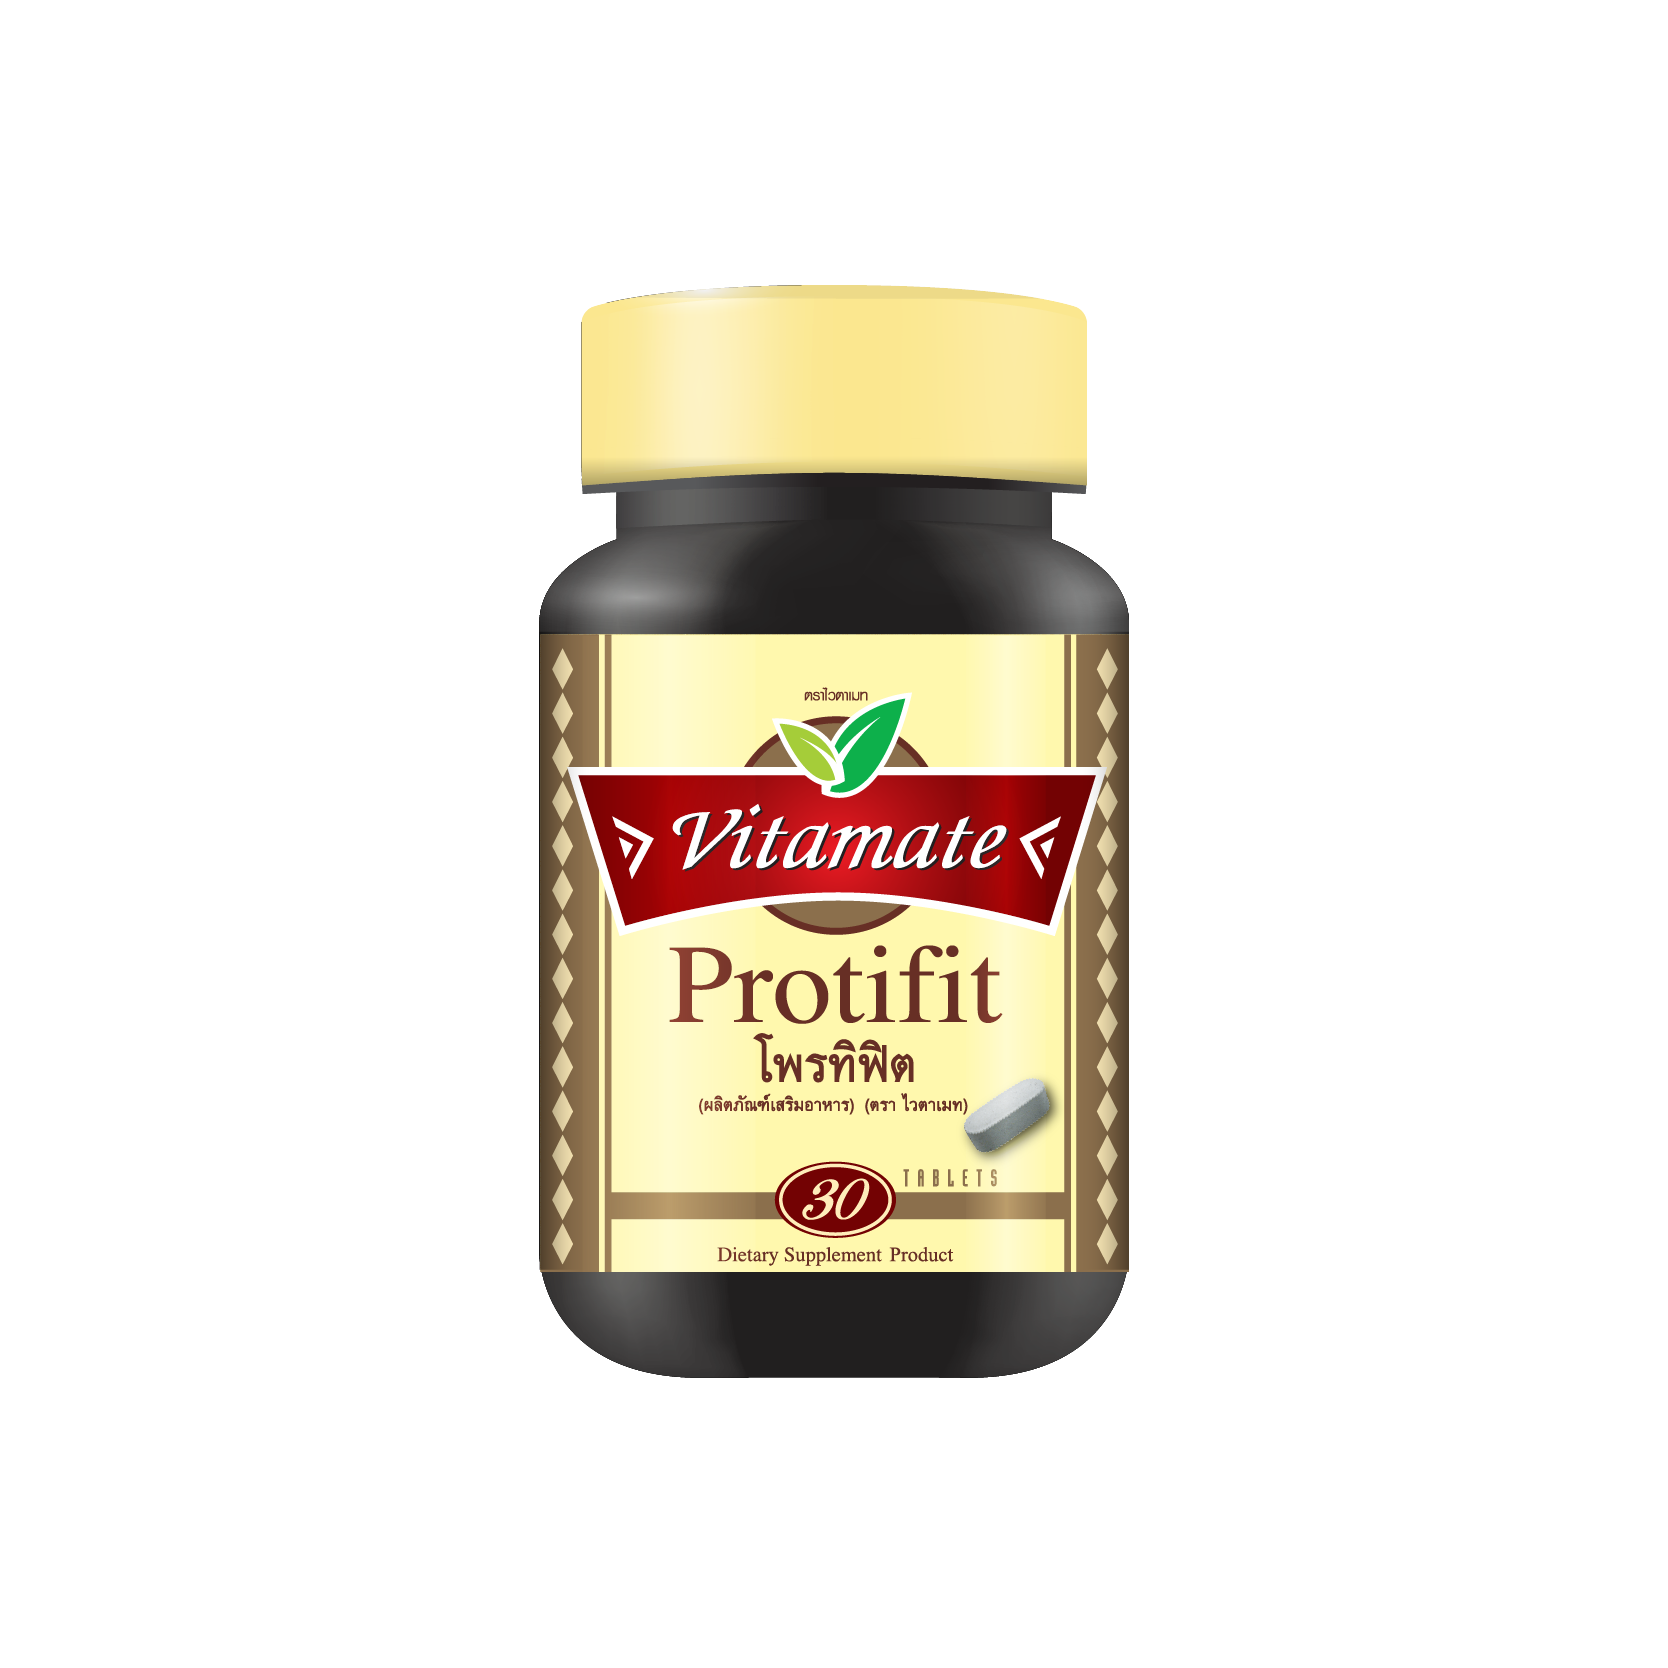 Vitamate Protifit 30 Tablets